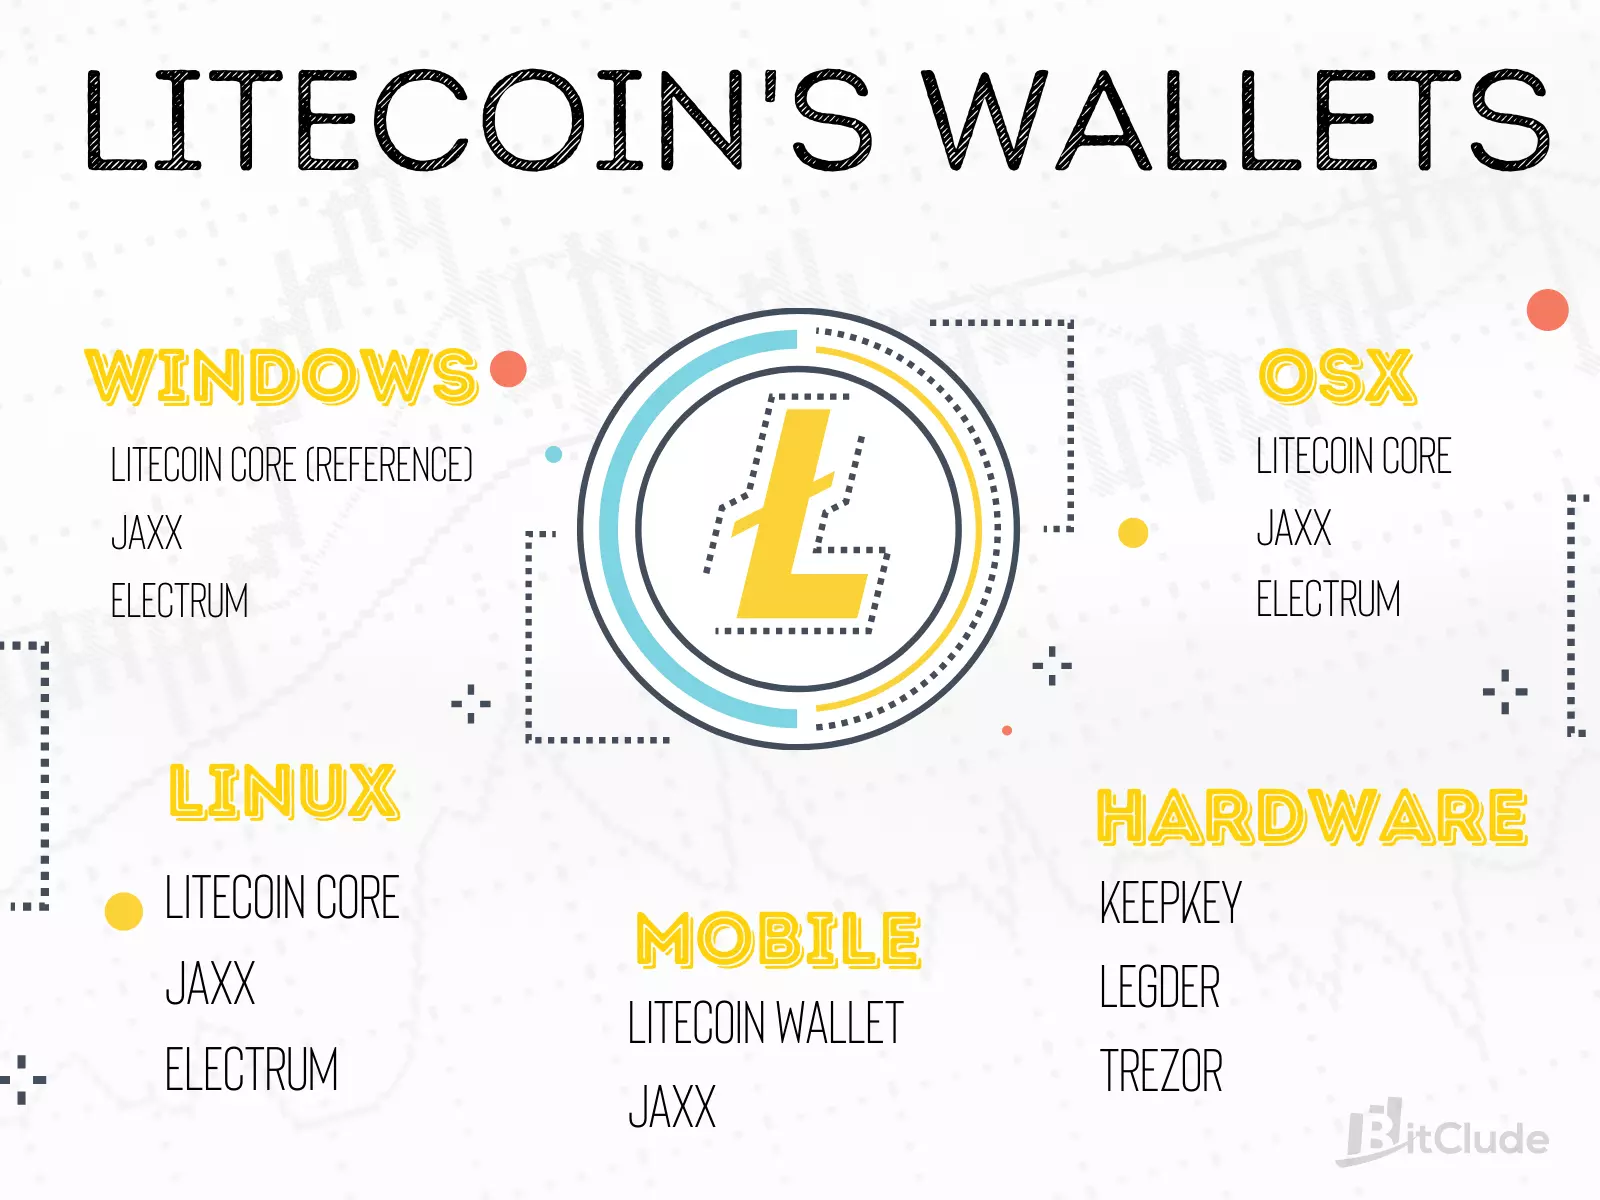 Litecoin wallets